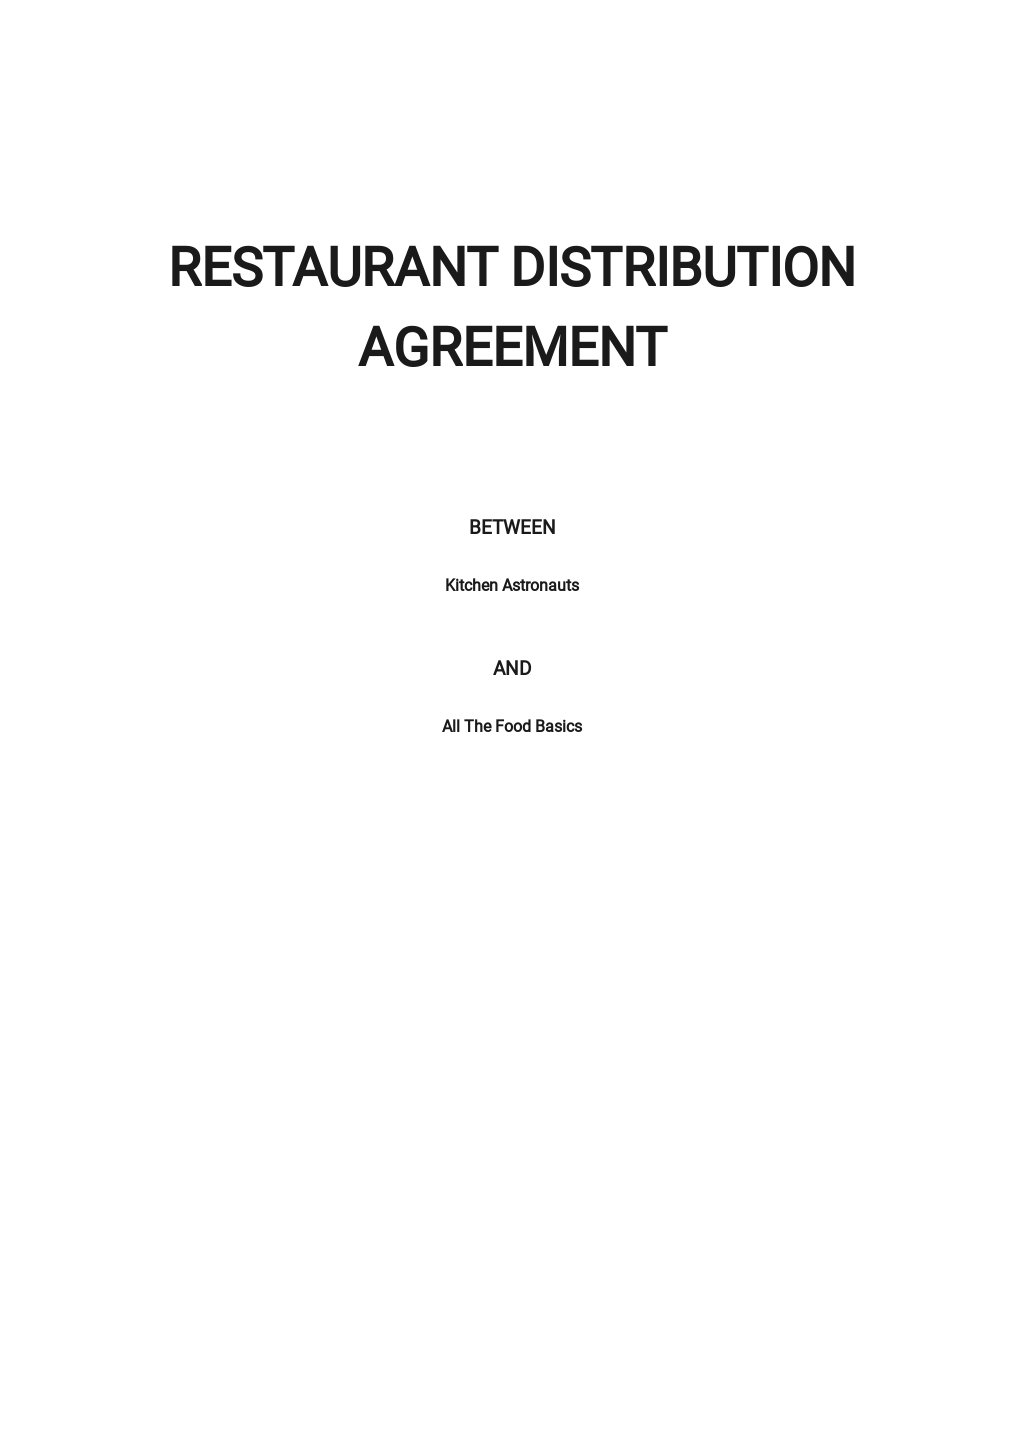 Restaurant Distribution Agreement Template.jpe